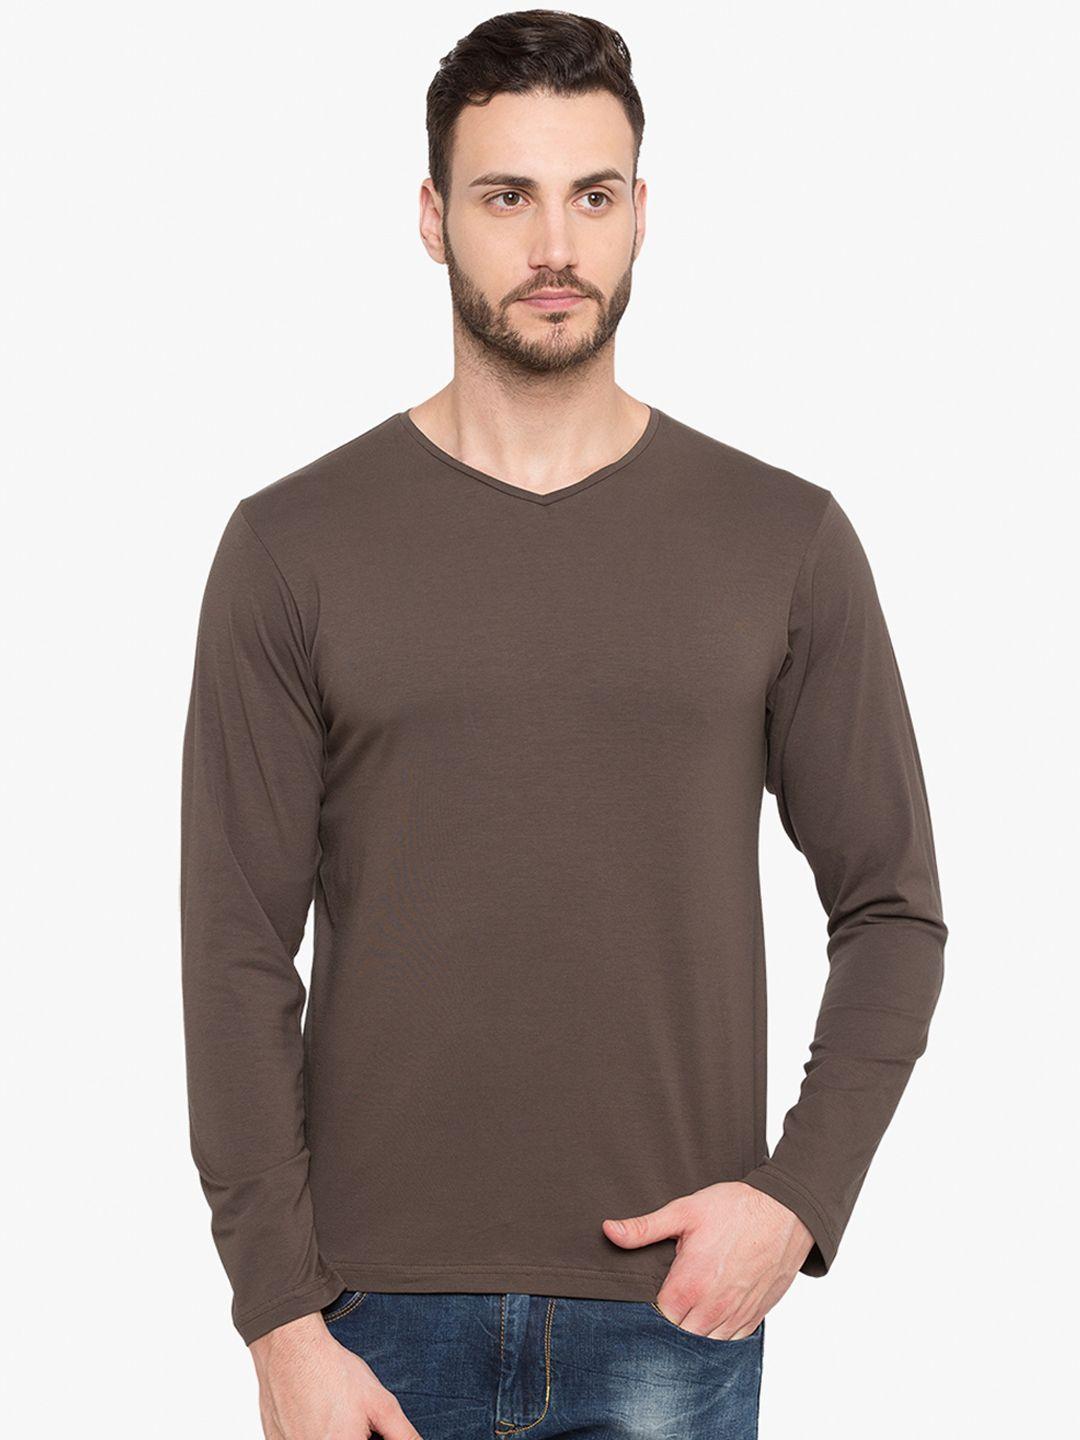 status quo men olive brown solid slim fit v-neck pure cotton t-shirt